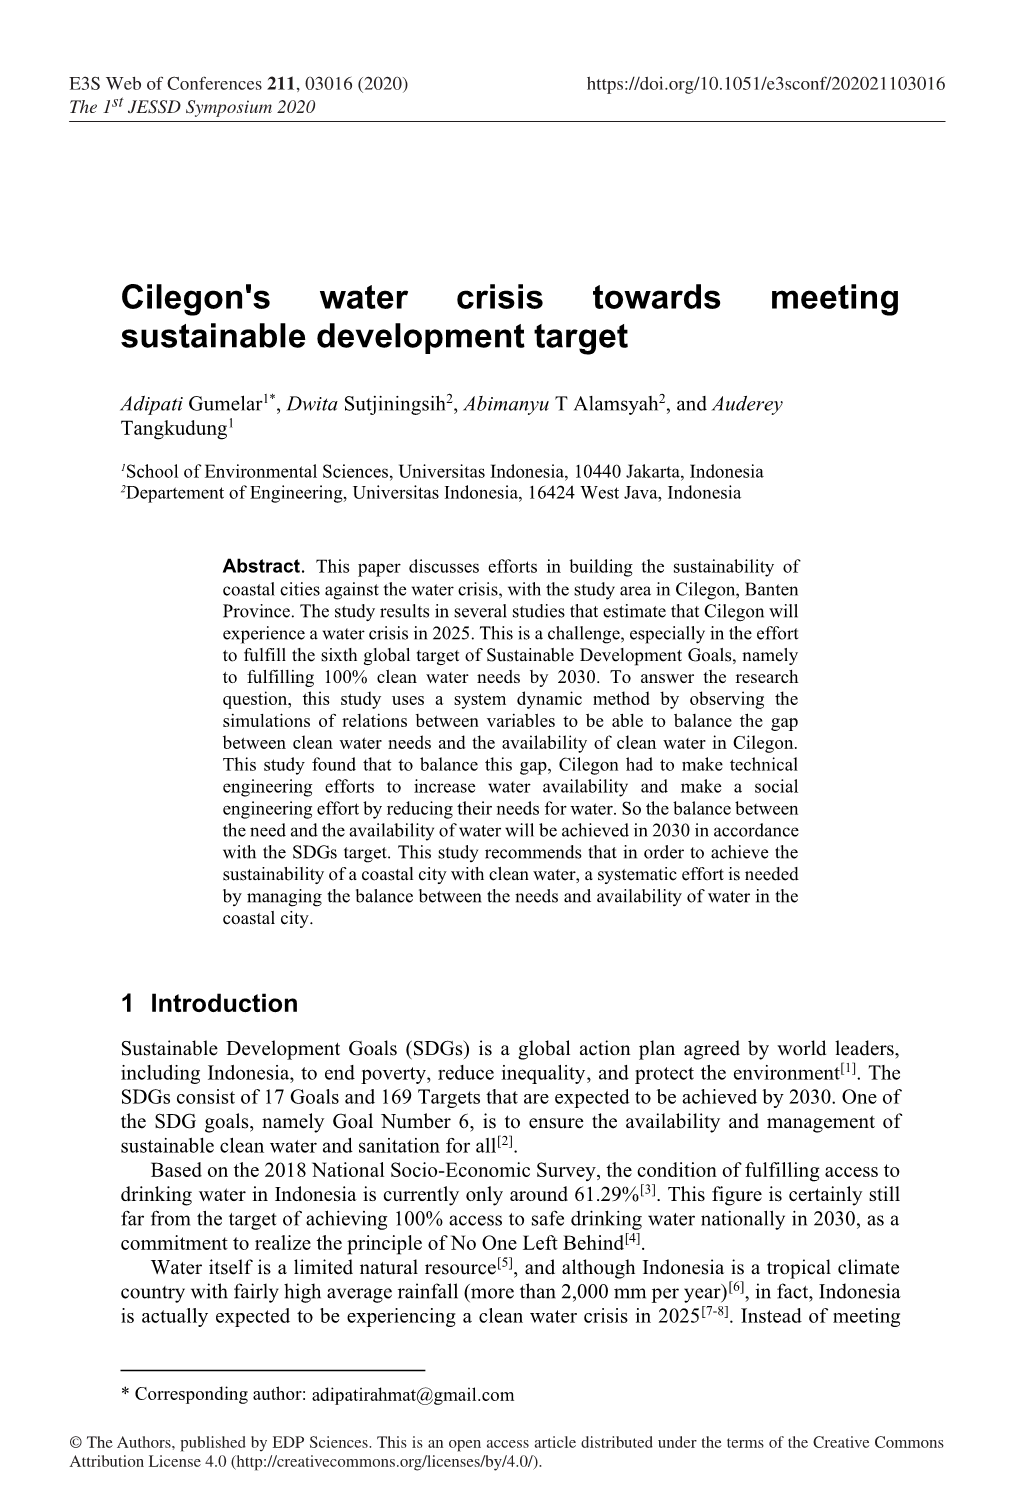 Cilegon's Water Crisis Towards Meeting Sustainable Development Target